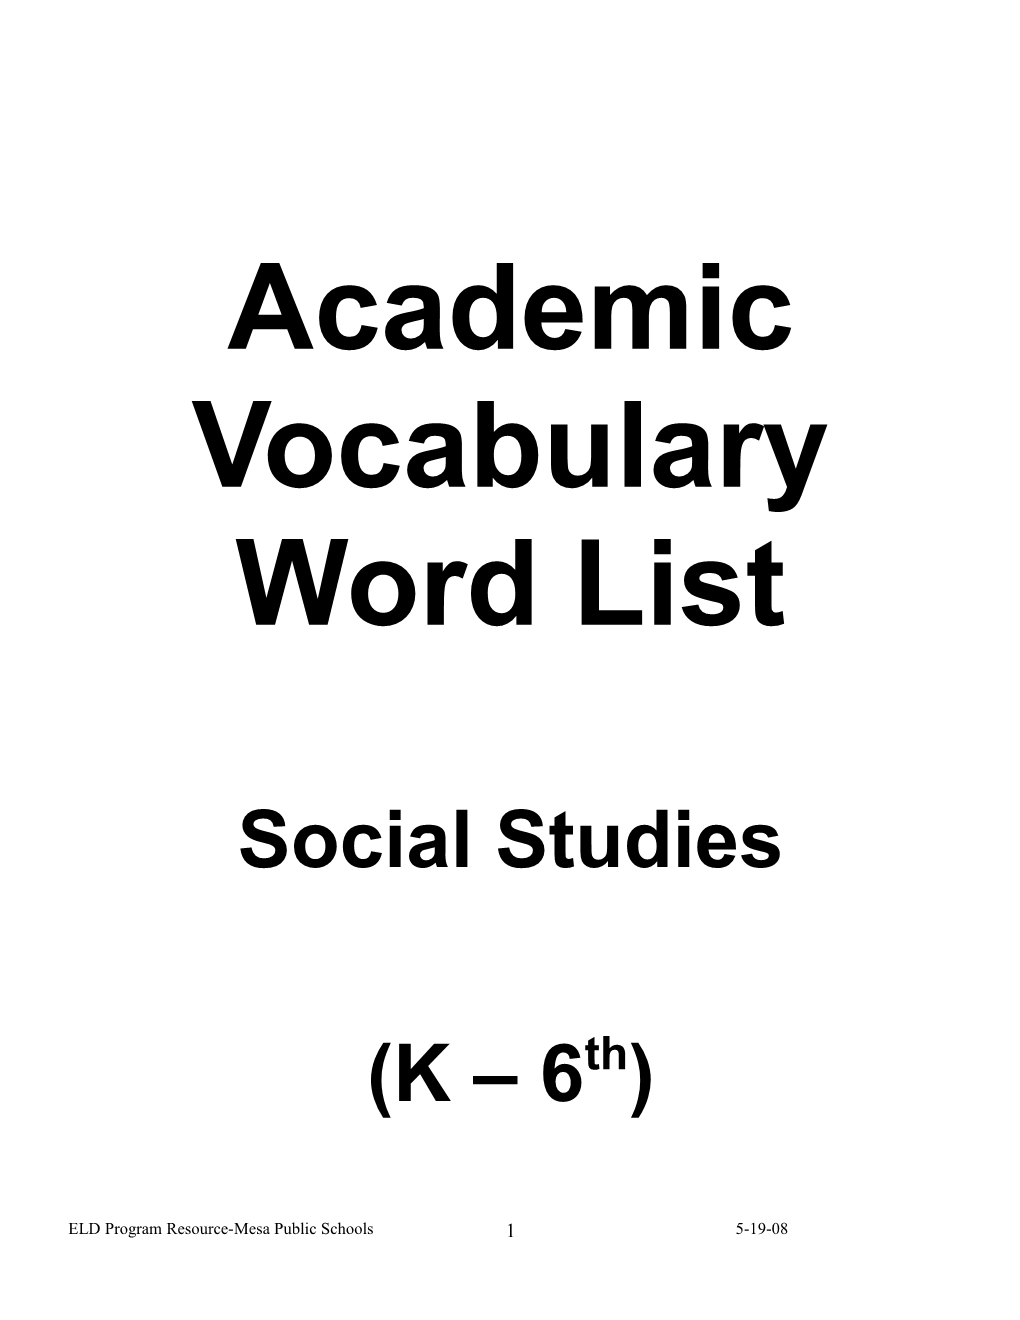 Academic Vocabulary Word List